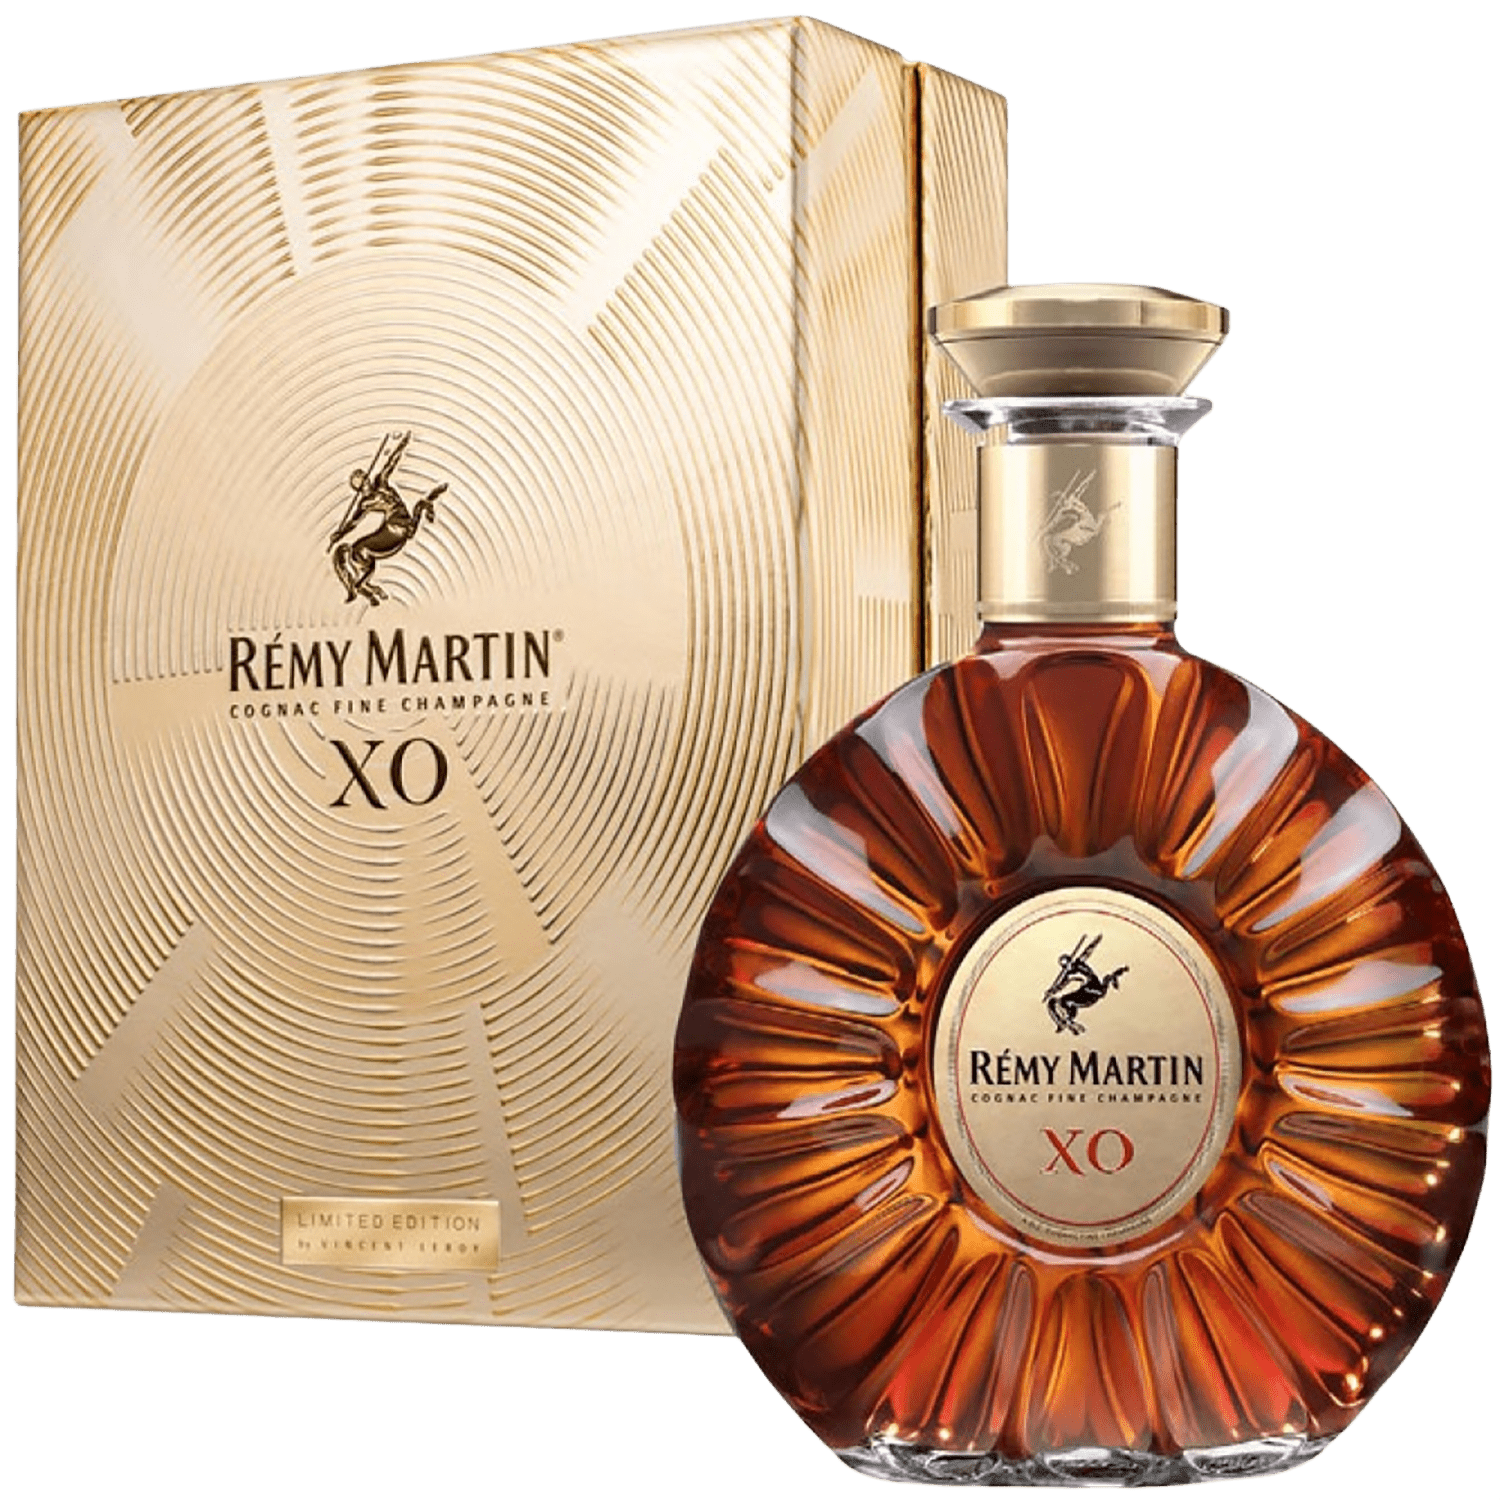 Rémy Martin Gold Cognac XO (gift box) roullet cognac xo gold grande champagne gift box